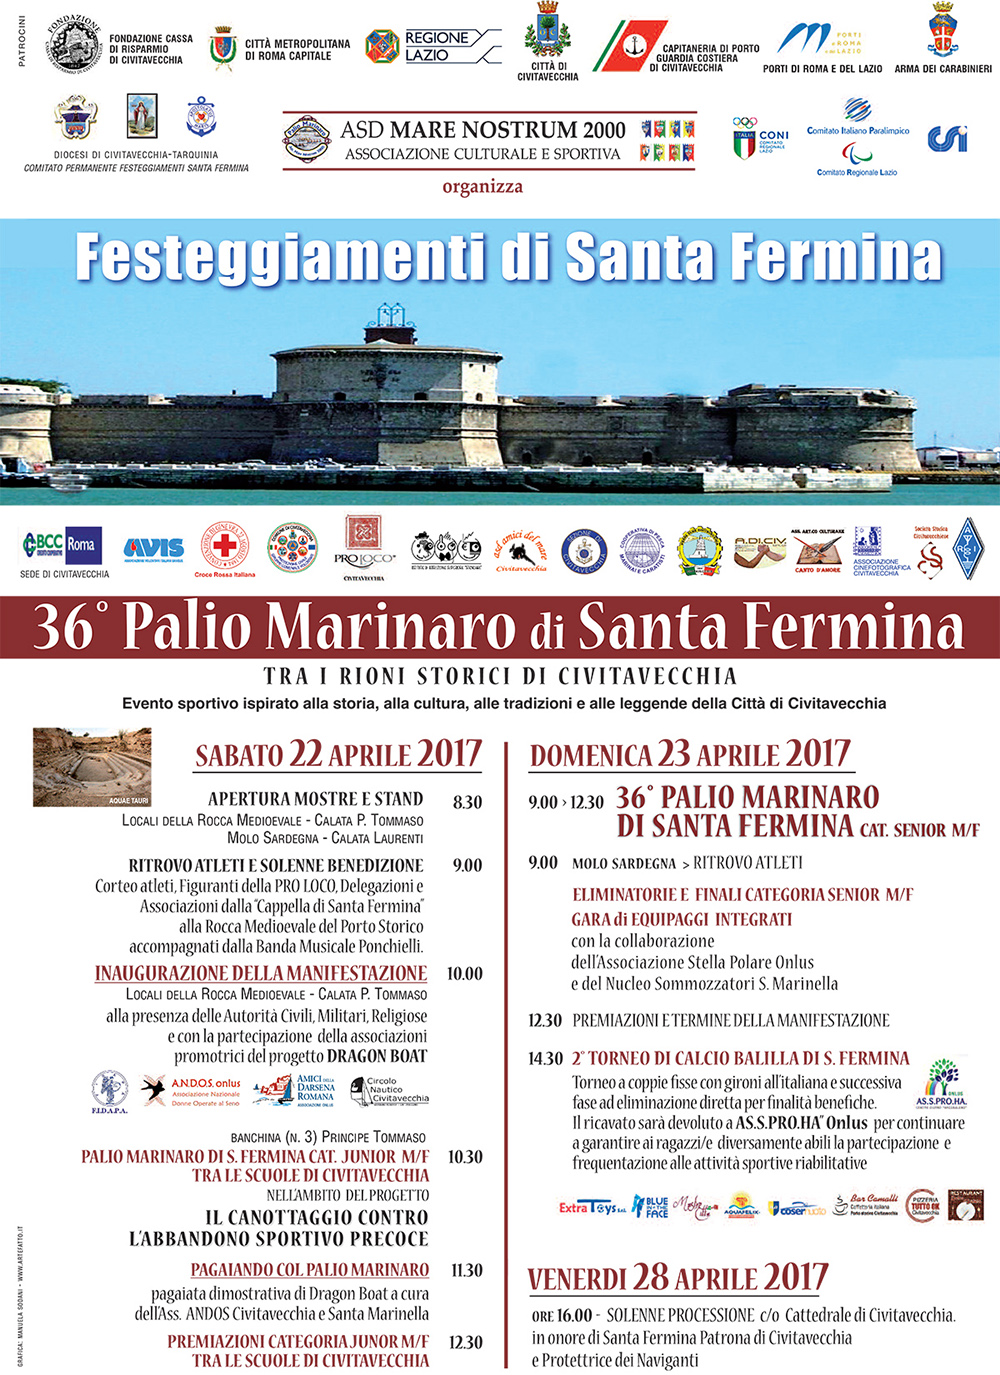 Programa del 36º Palio Marinaro de Santa Fermina en Civitavecchia